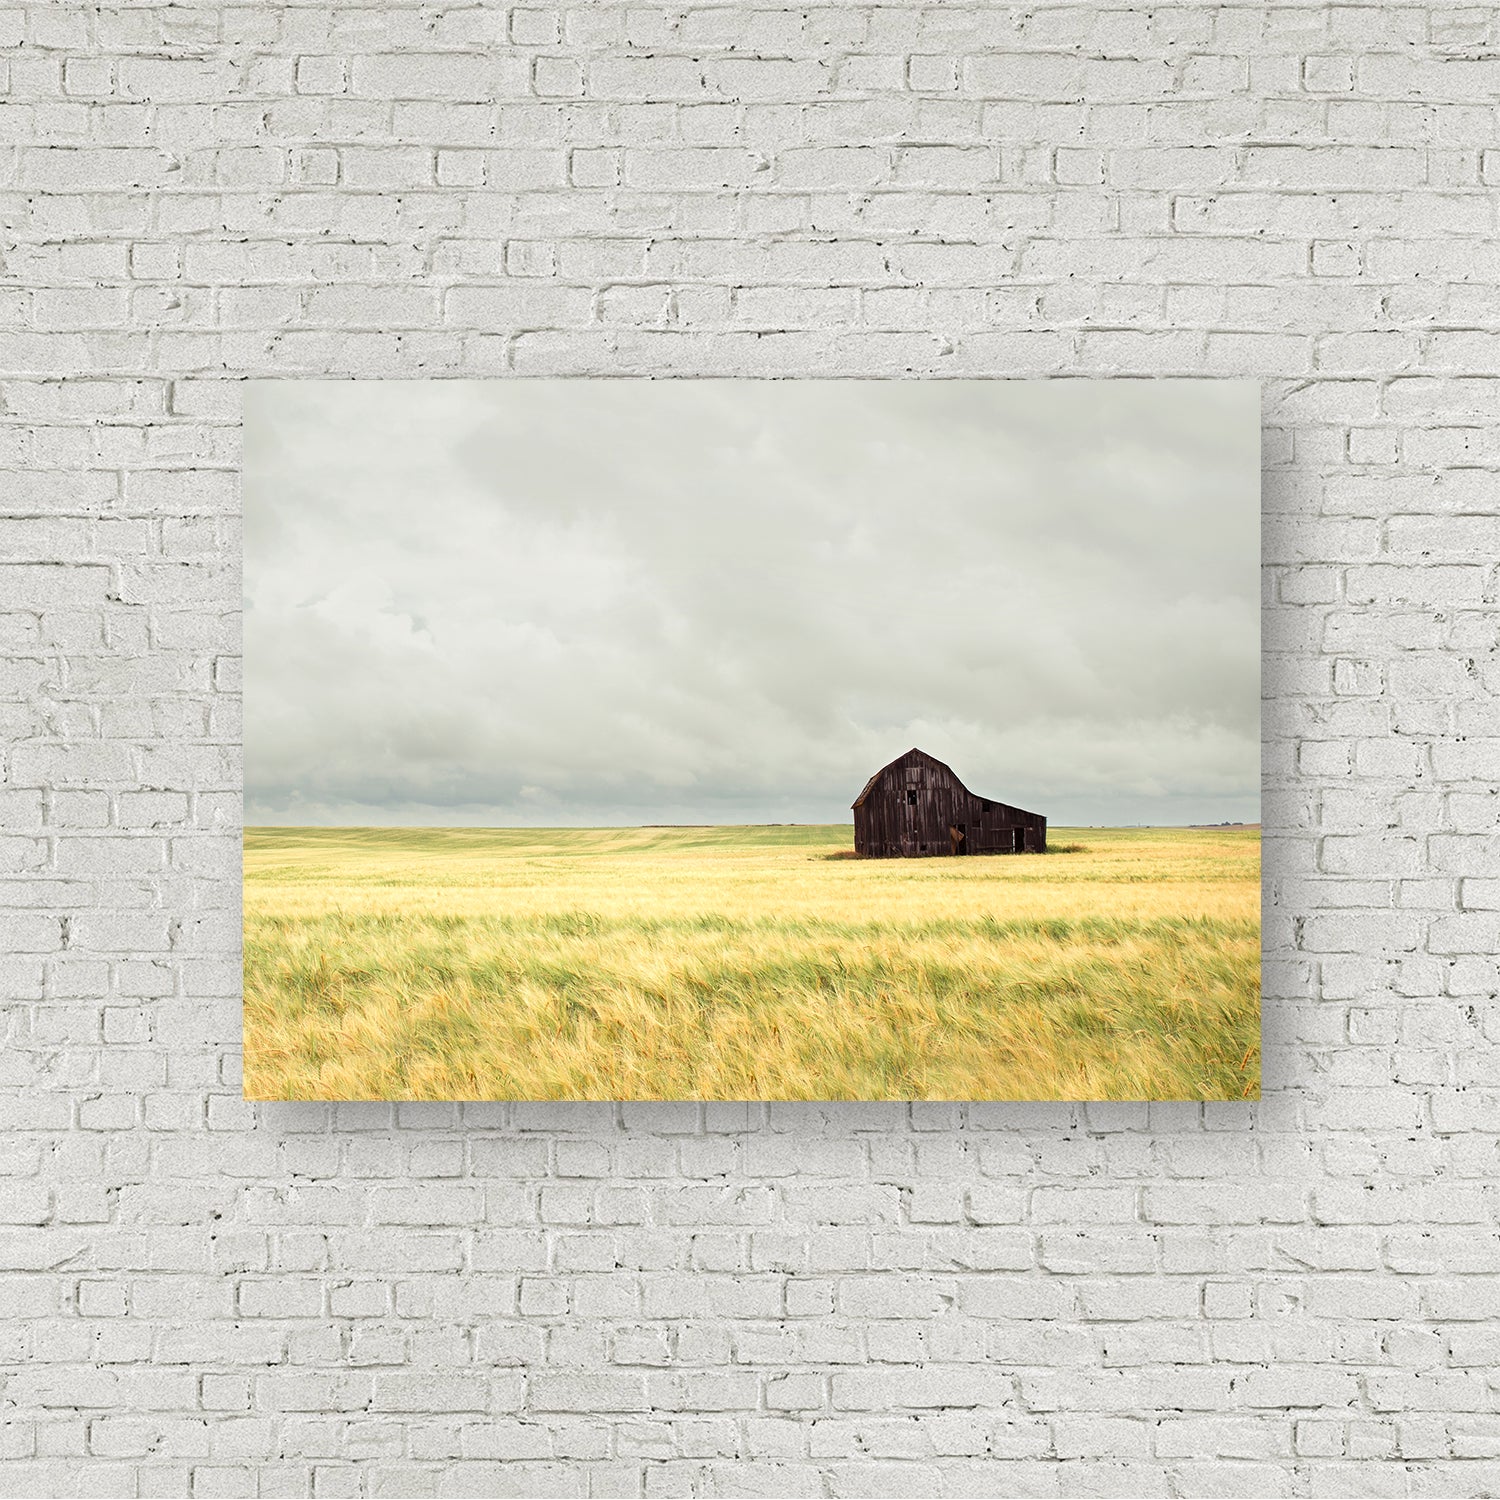 Prairie Dreams (Cropped Version)